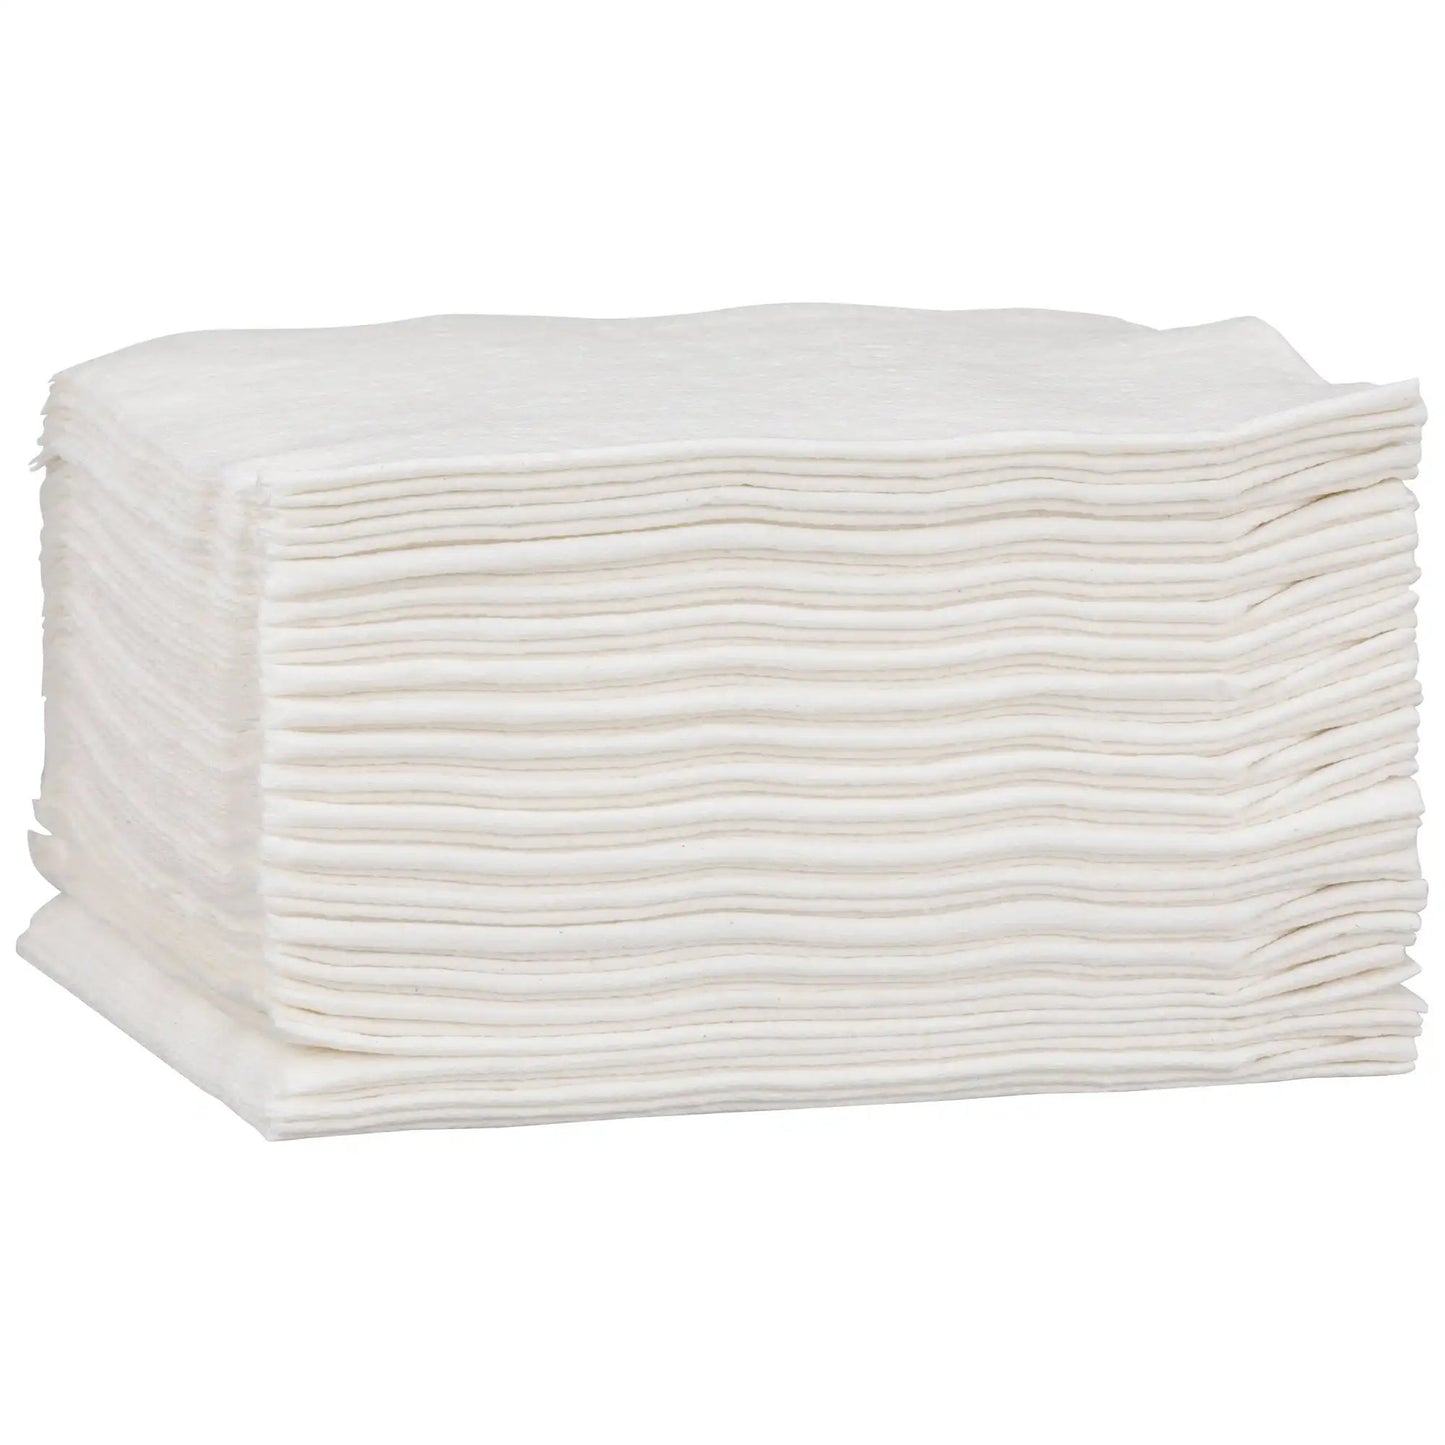 McKesson Disposable Washcloths White